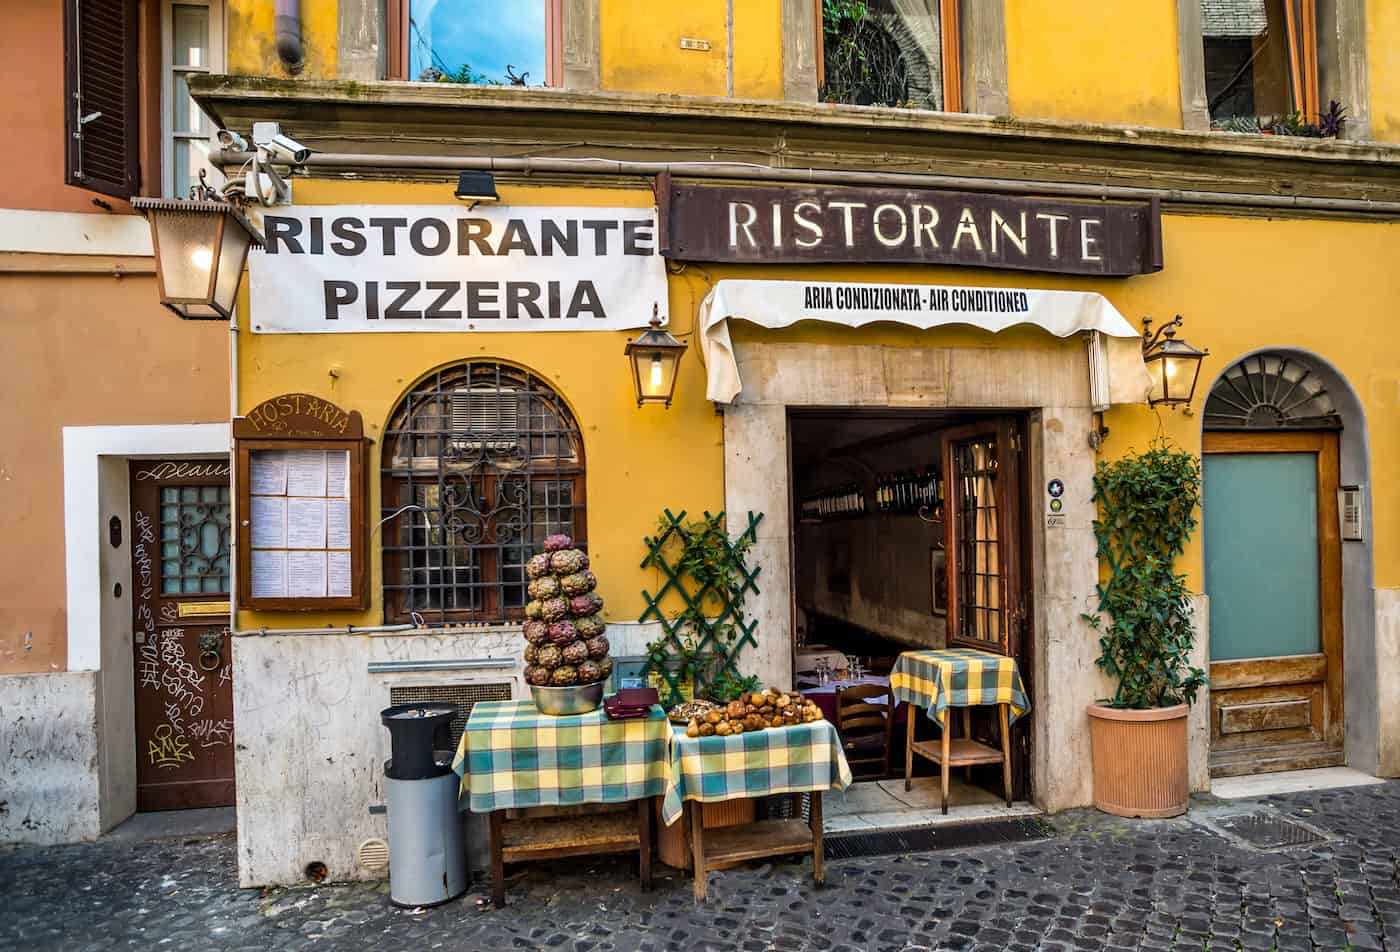 Restaurant entrance at Trastevere area 